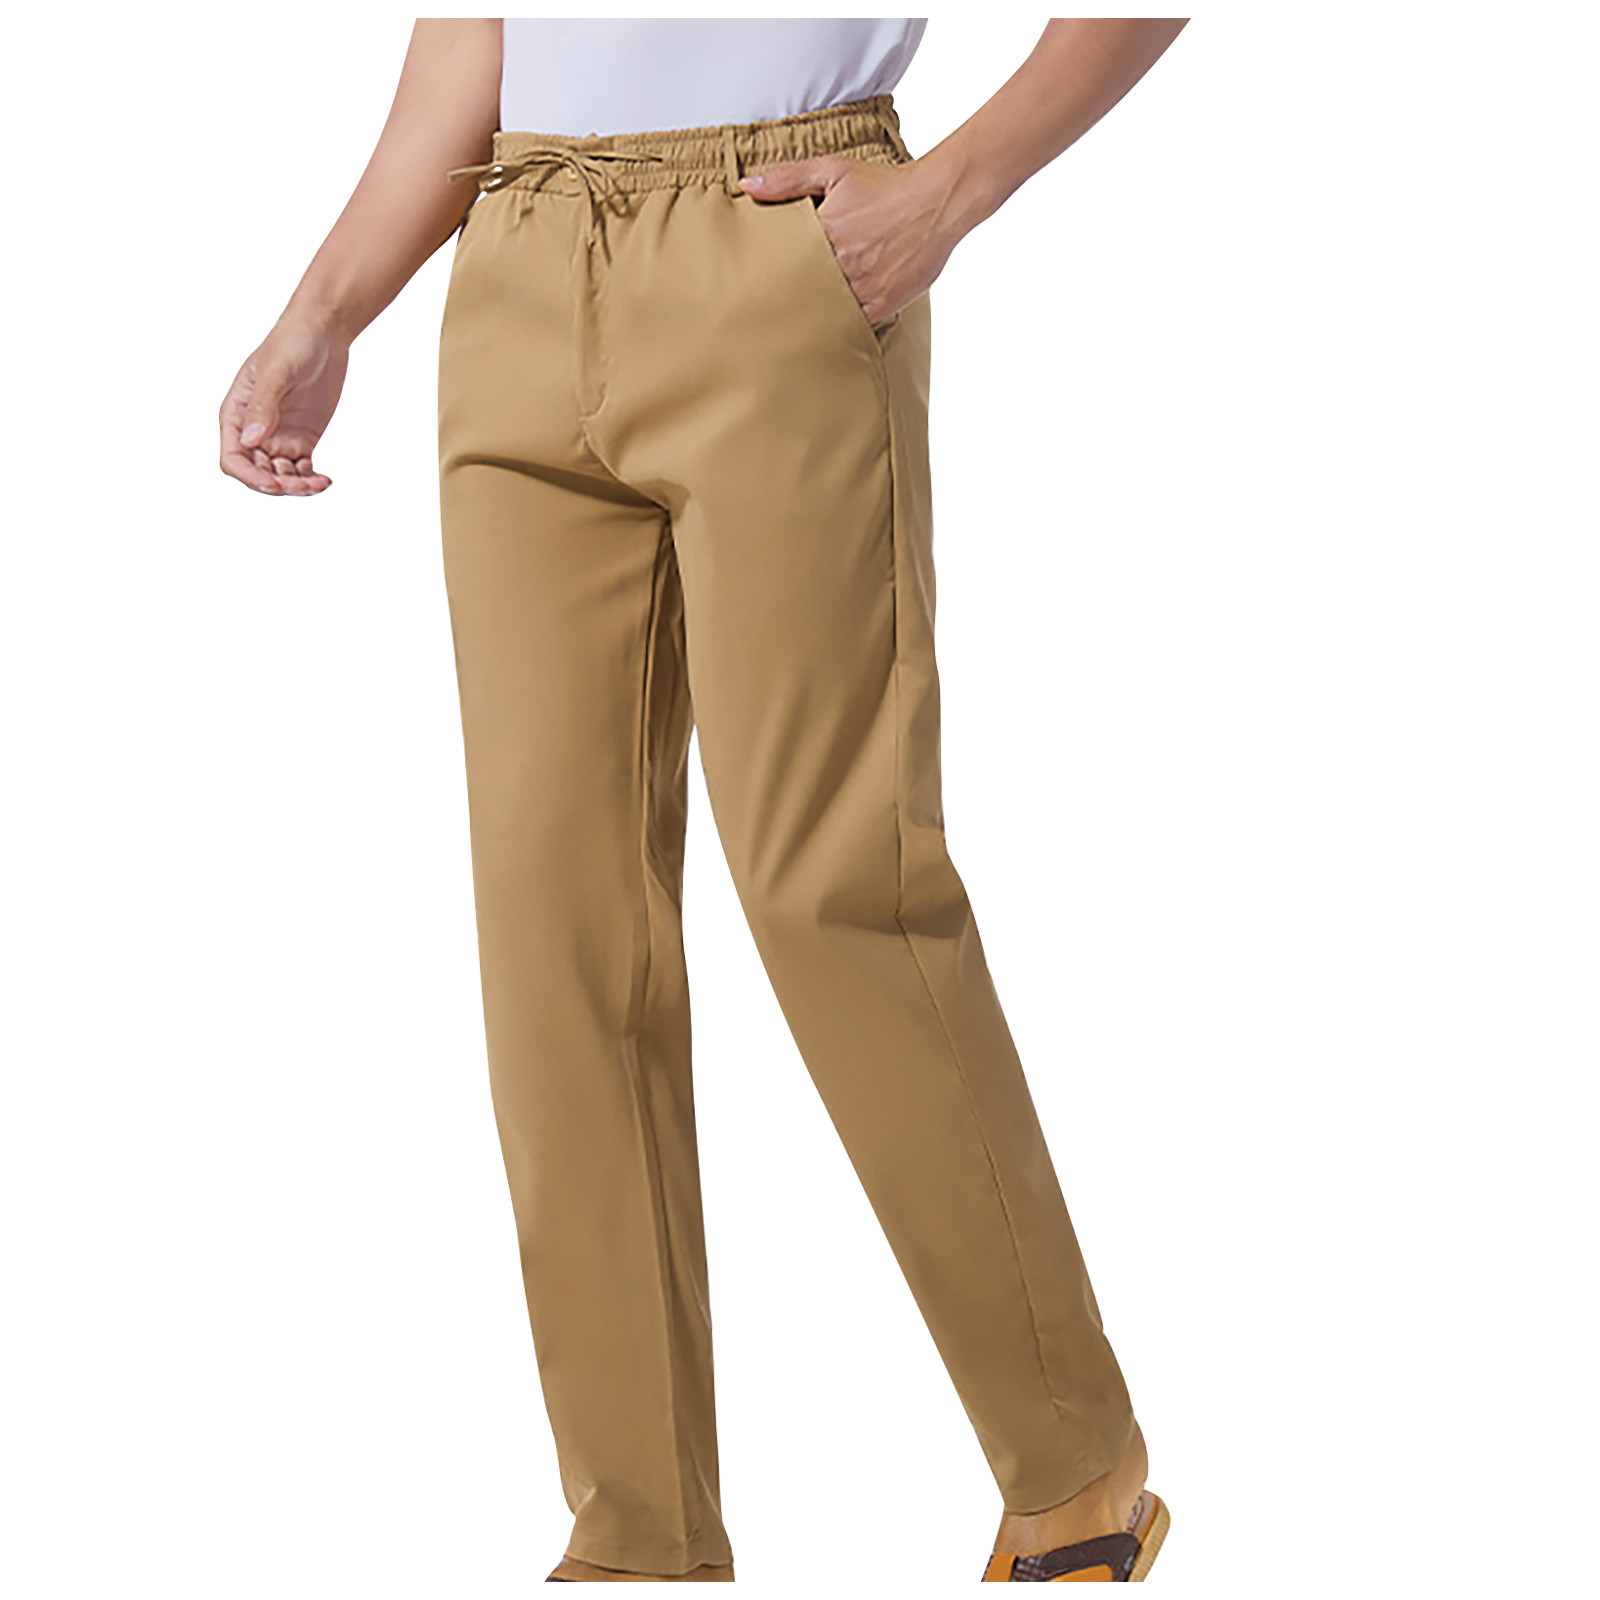 Tdoqot Chinos Pants Men- Drawstring Comftable Elastic Waist Slim Casual Cotton Mens Pants Khaki - image 2 of 6